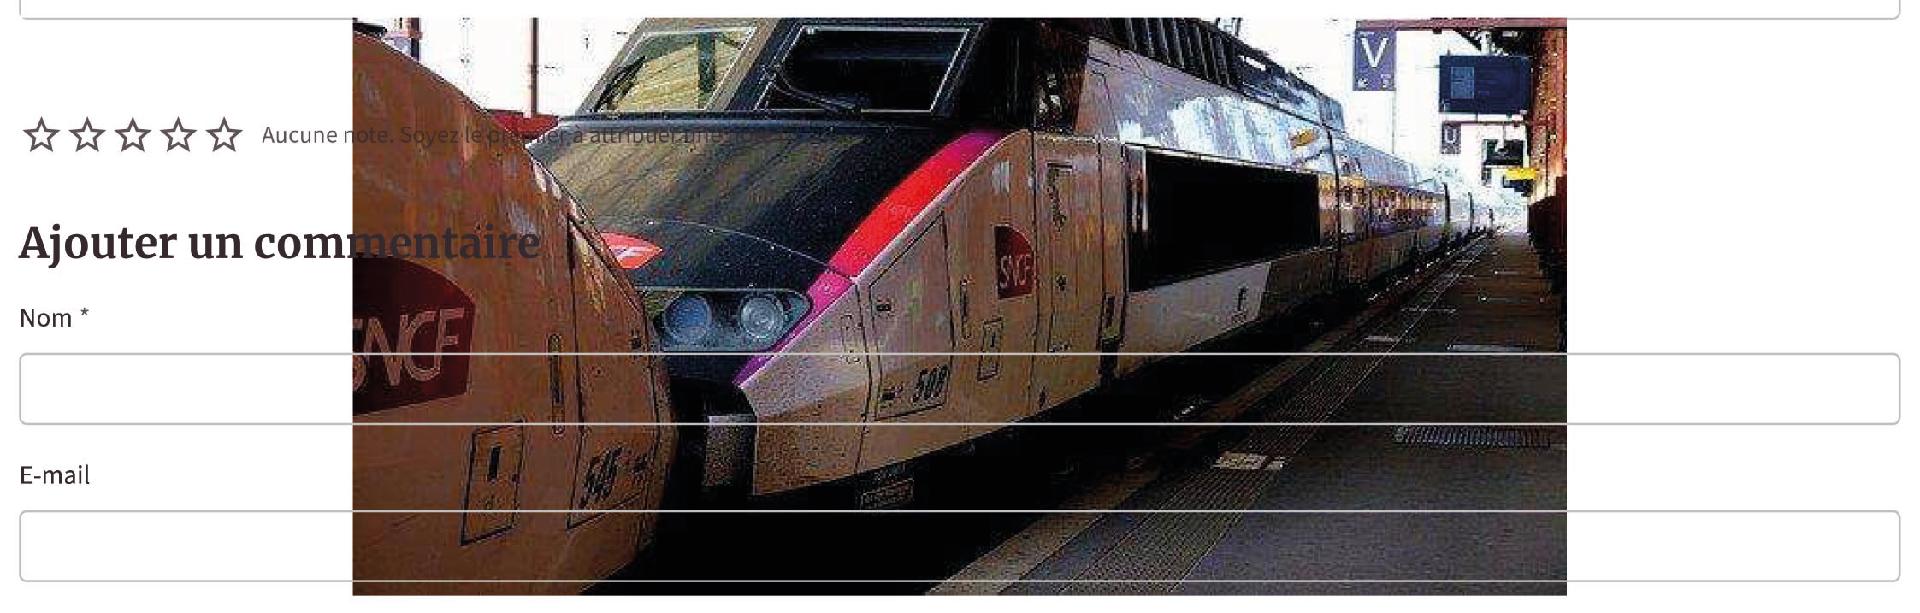 Article - TGV